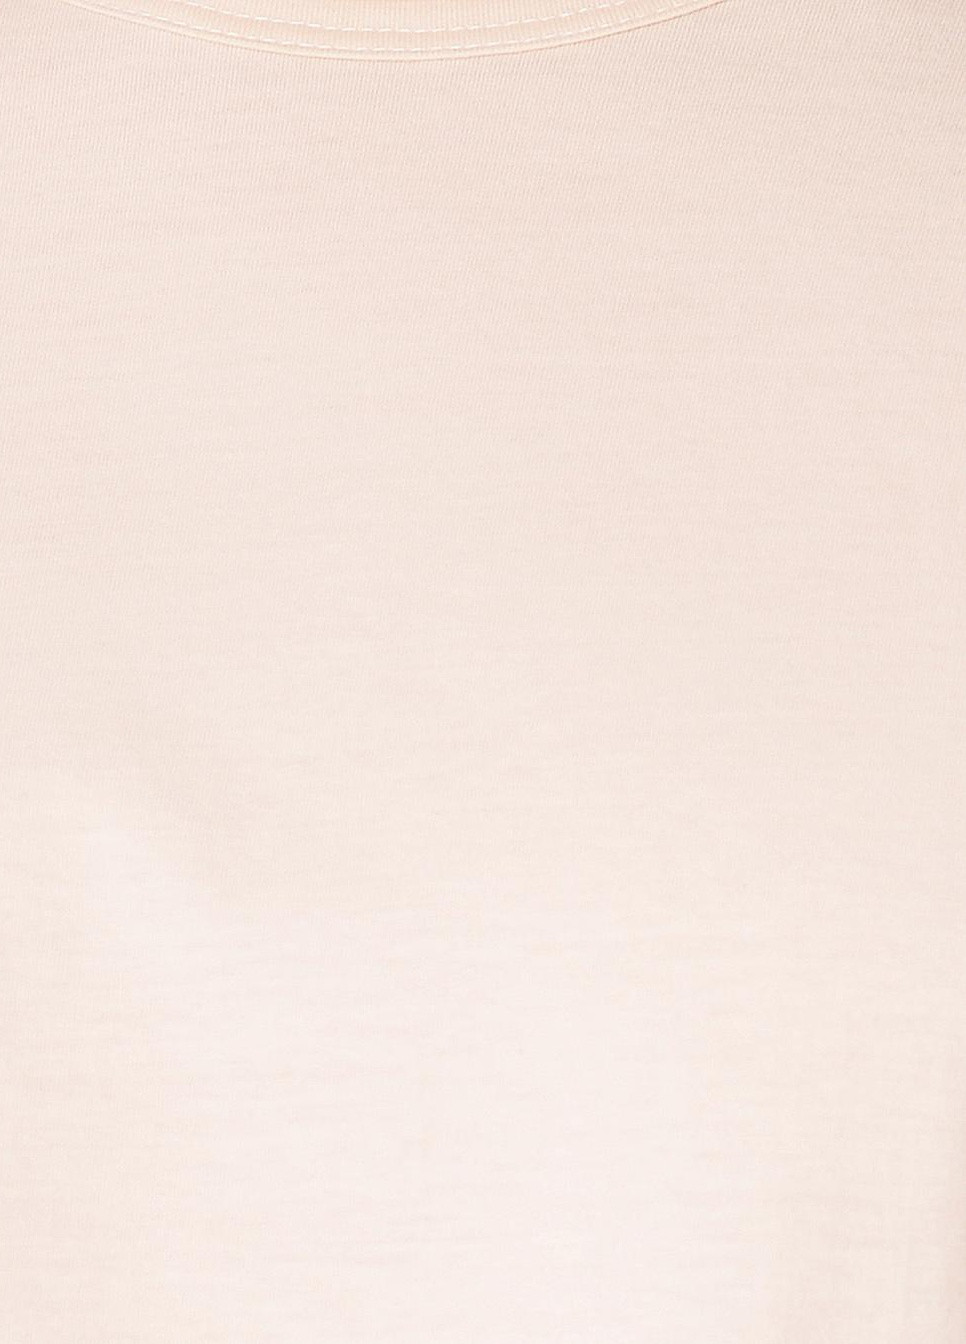 Темно-бежевая футболка мужская ariston бежевый 202 Cornette